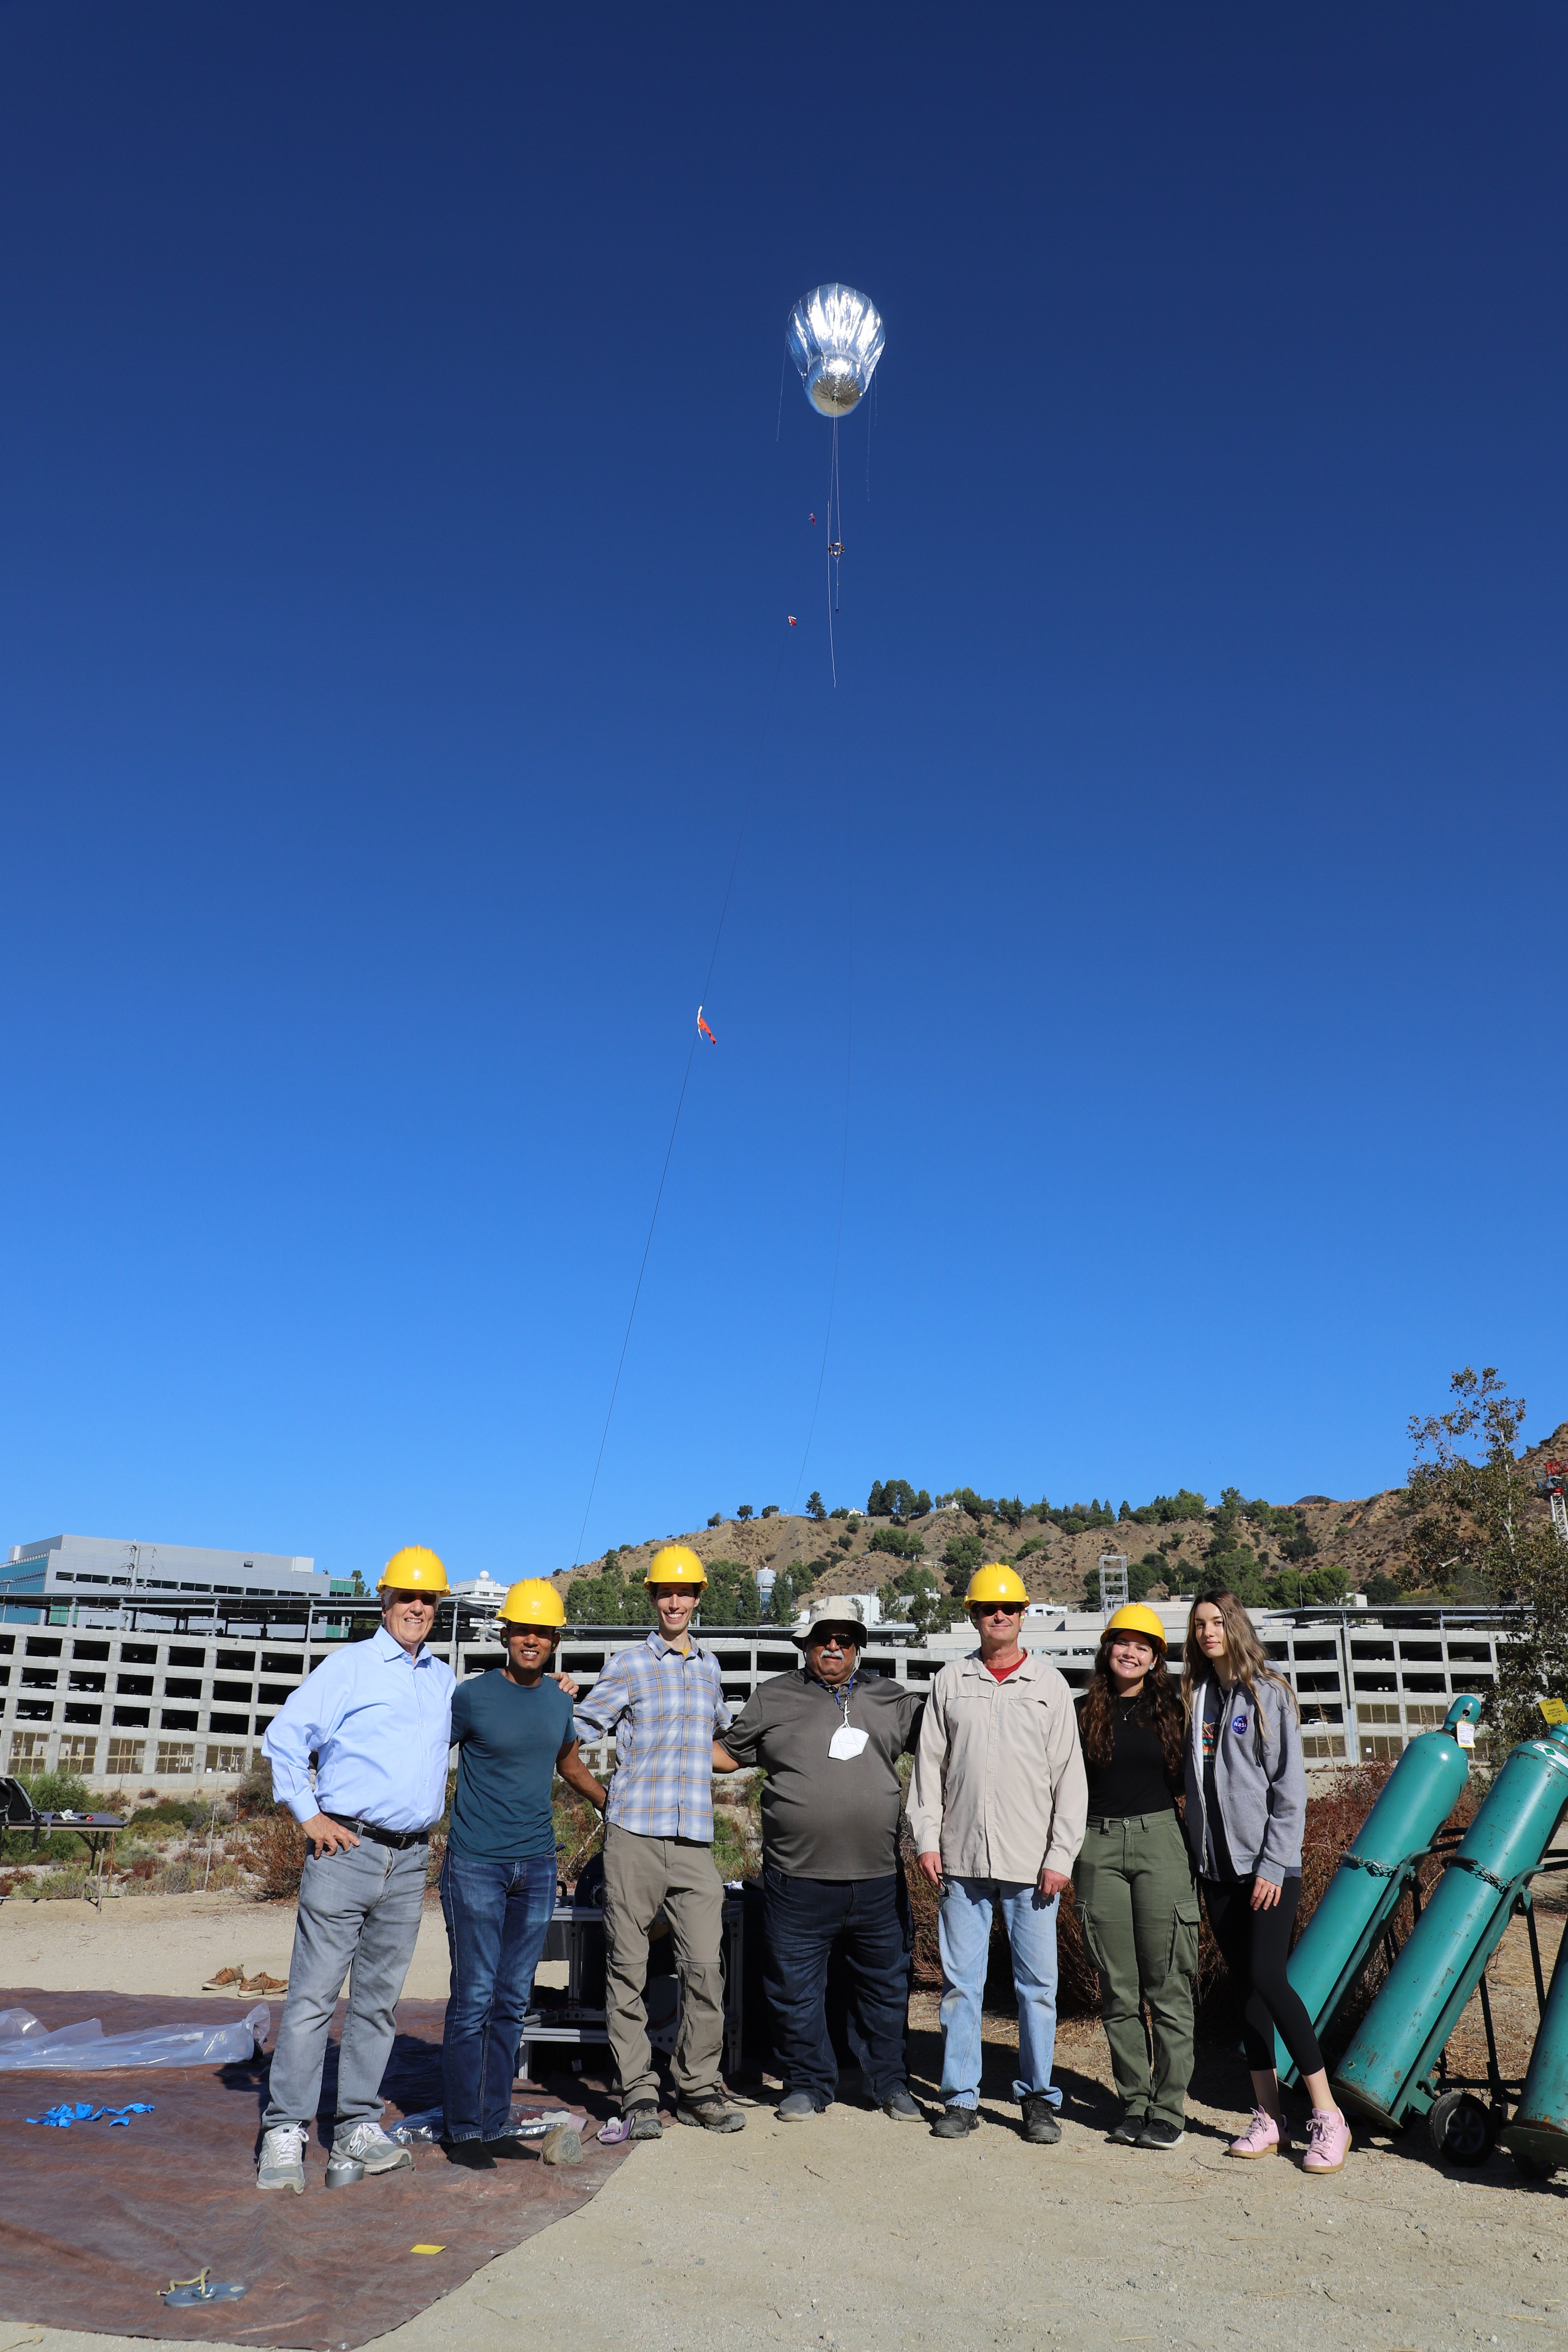  Picture: Group photo of tethered Venus aerobot flight at NASA-JPL. Left to right: Jim Cutts, Ashish Goel, Jacob Izraelevitz, Kirk Barrow, Mike Pauken, Tonya Beatty, Carolina Aiazzi